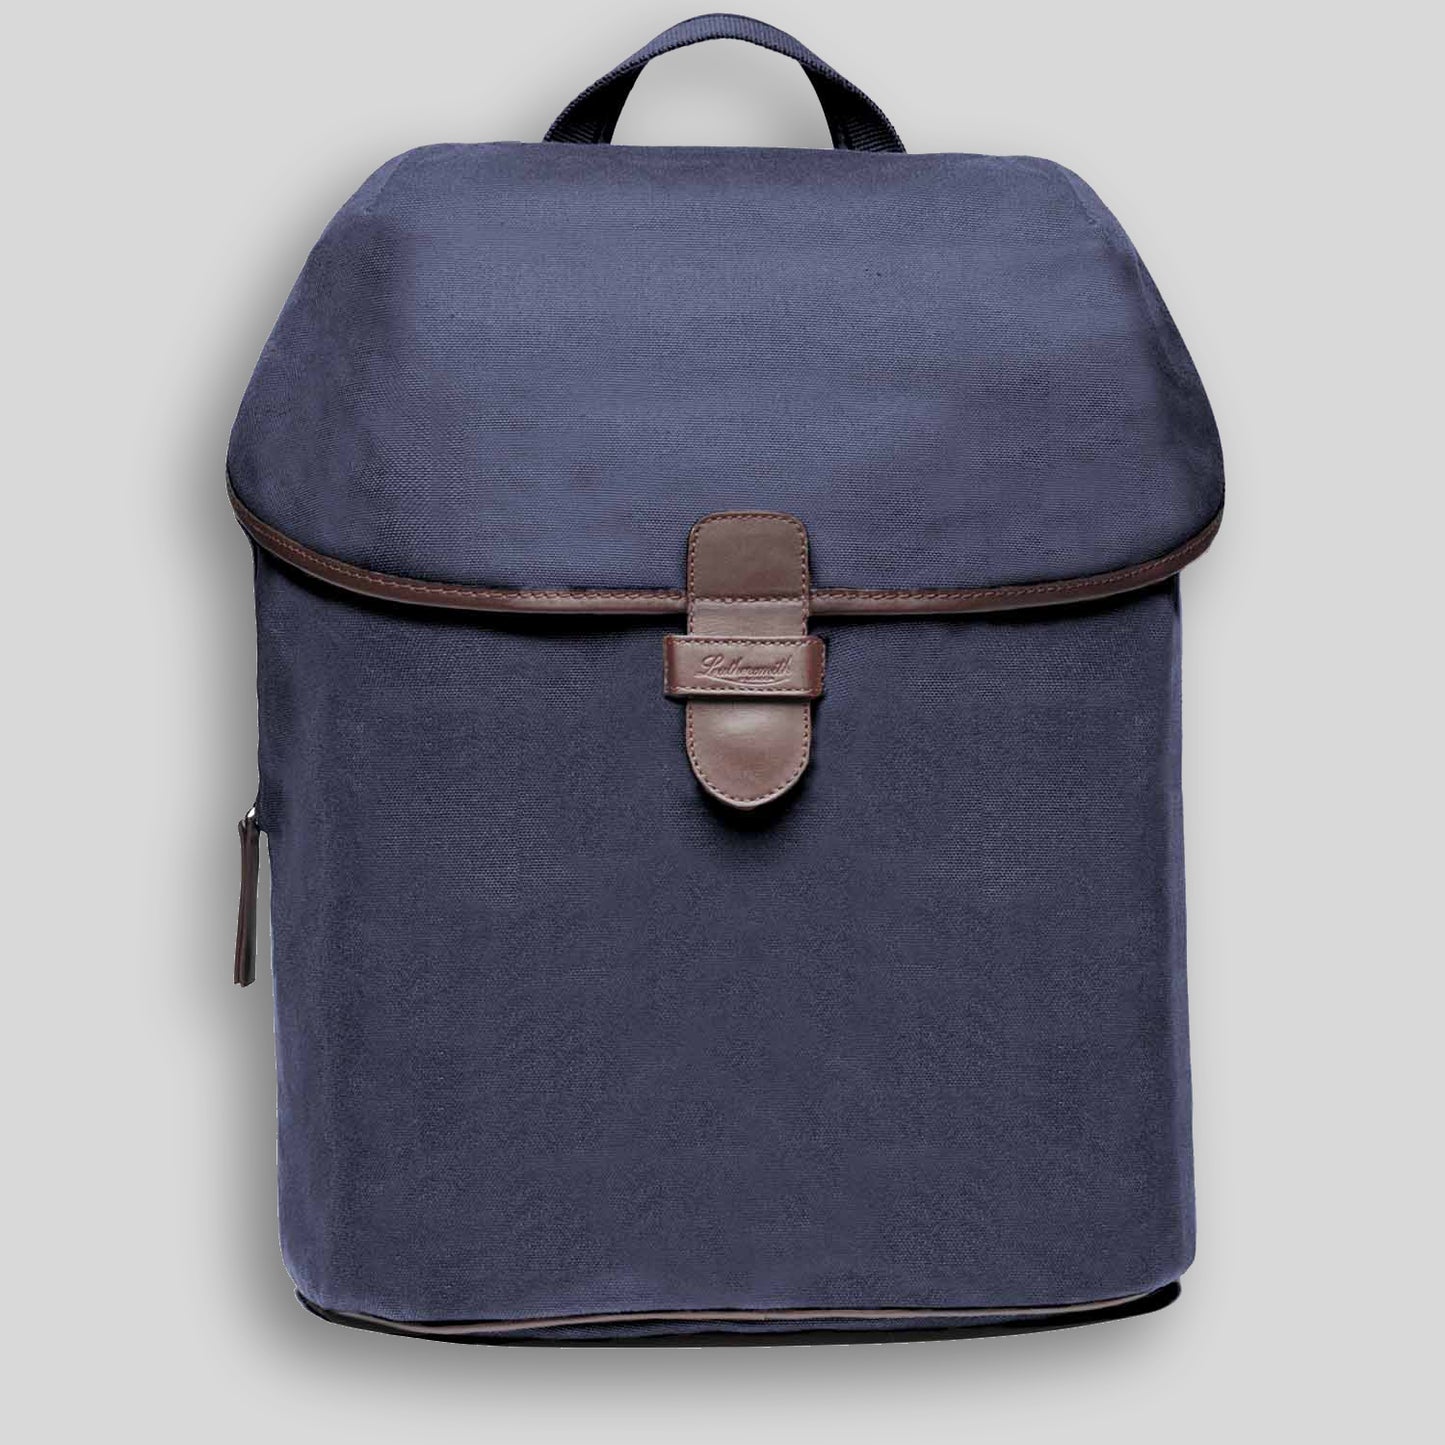 BKPLAIN002 | Plain Canvas Backpack